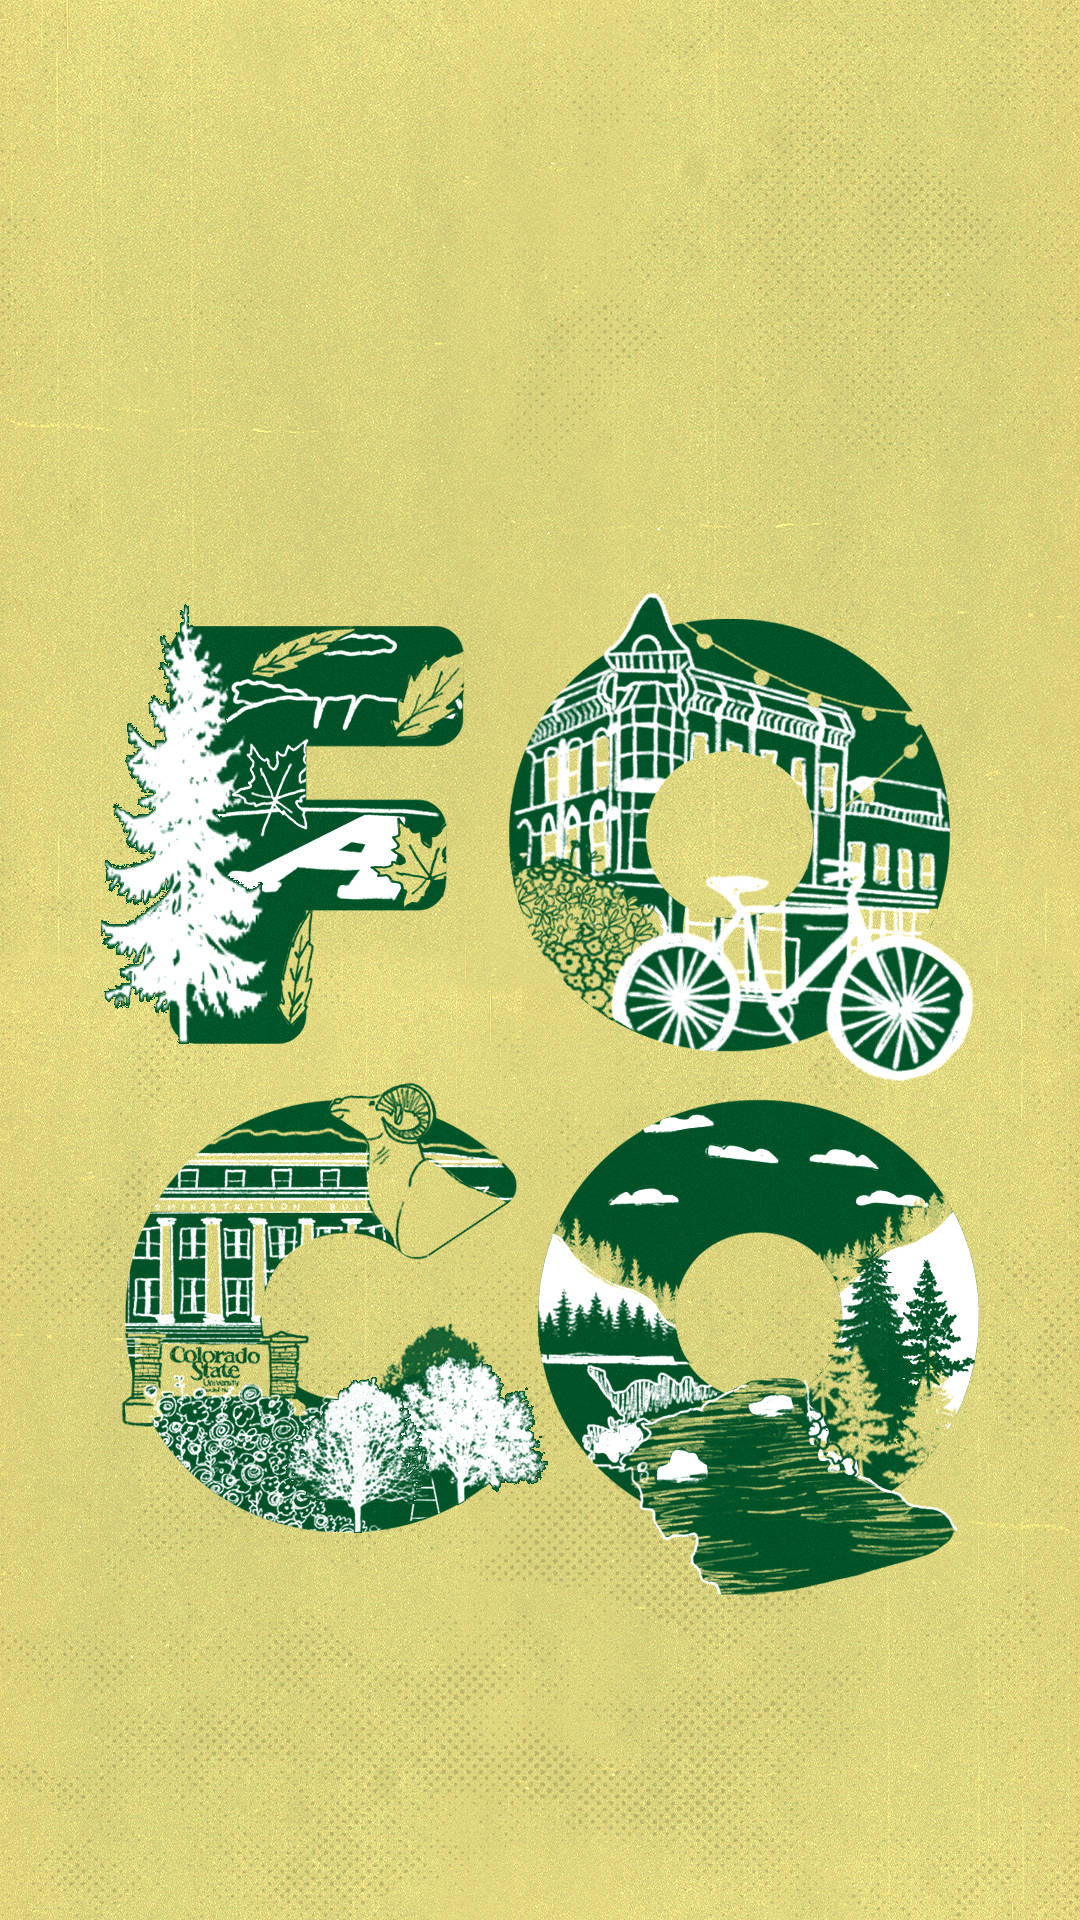 Focq Logo Colorado State University Wallpaper